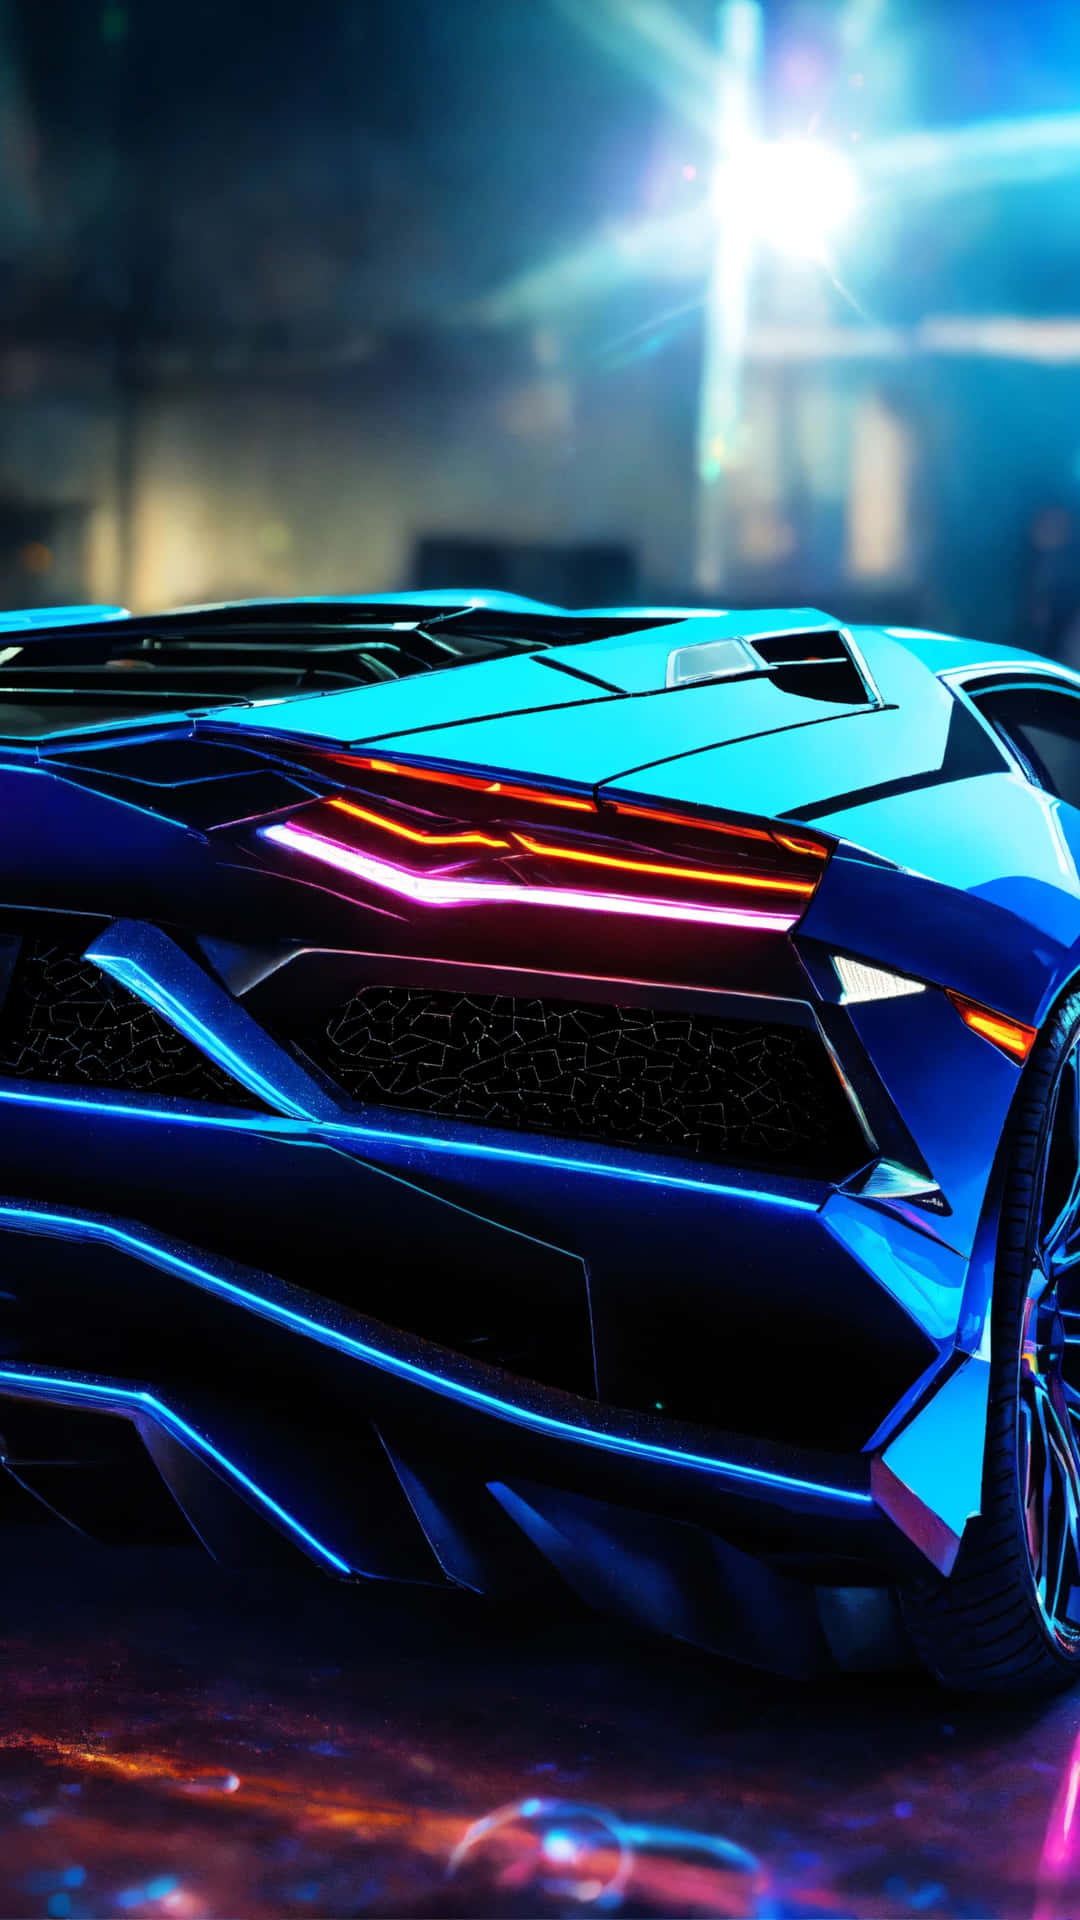 Neon Infused Lamborghini Nighttime Wallpaper